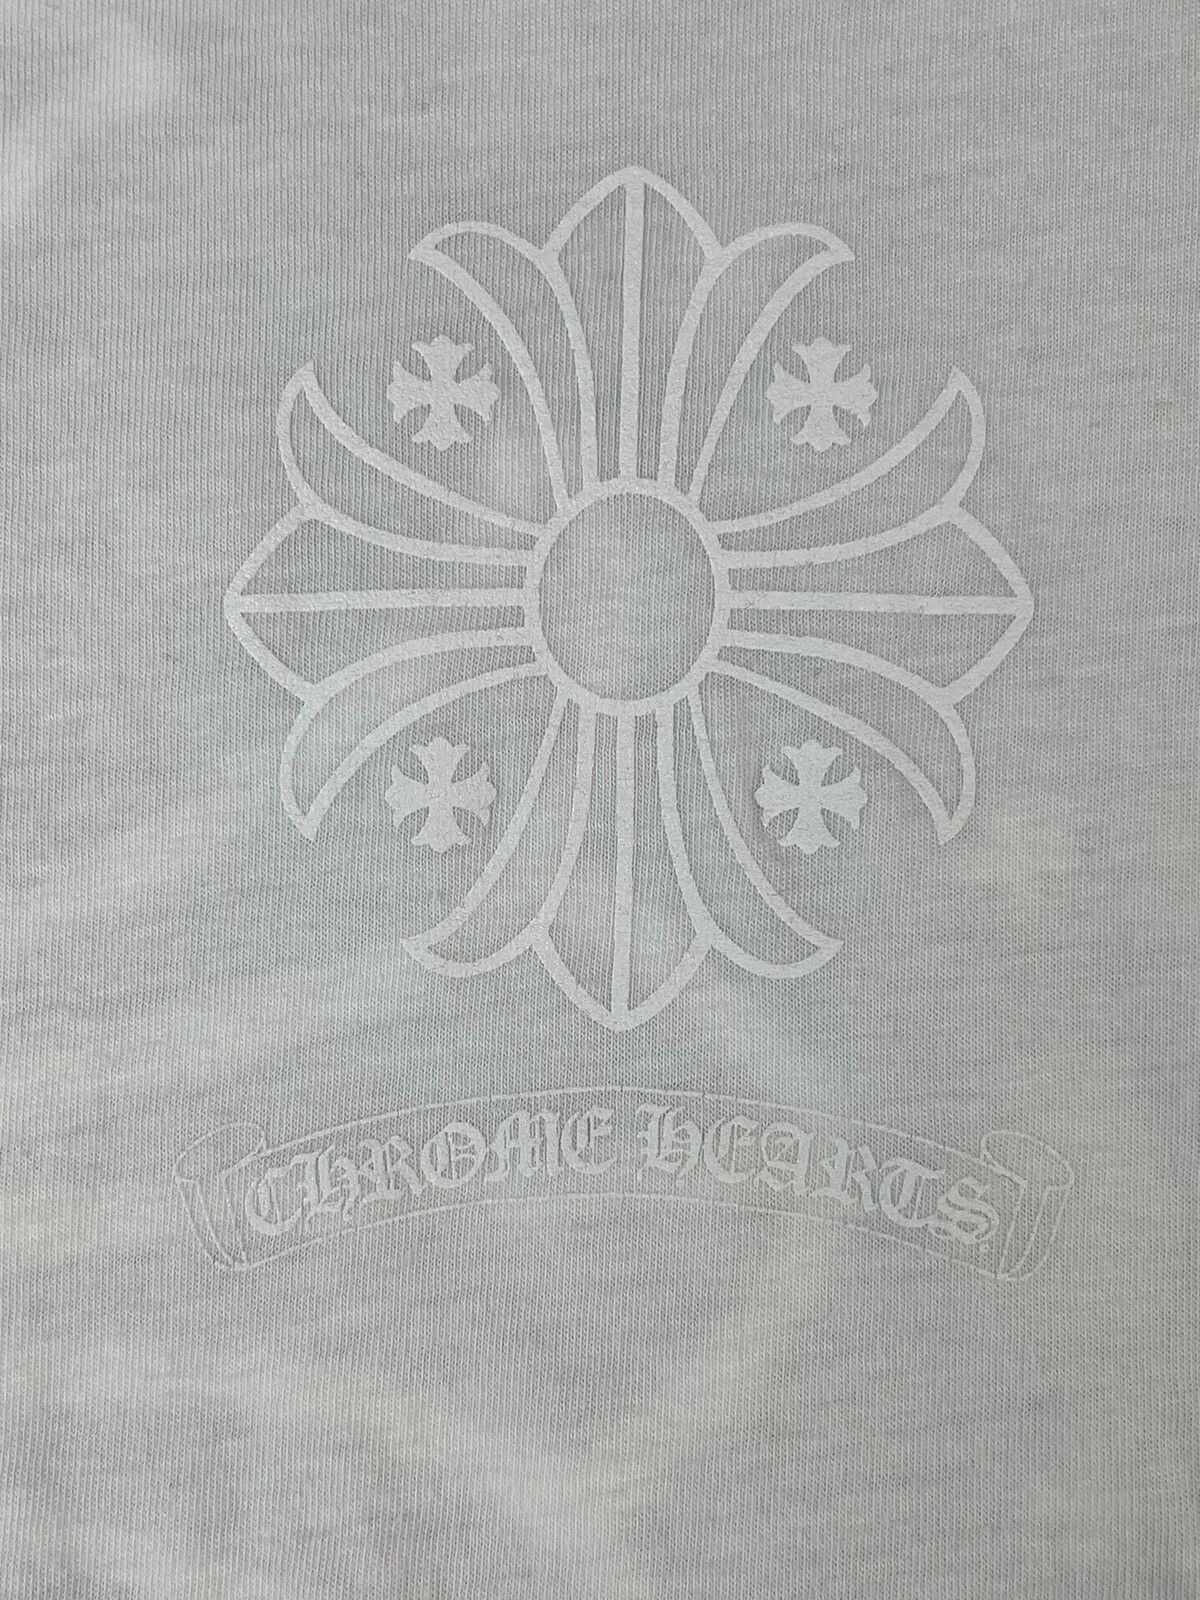 Chrome Hearts Chrome Hearts Tonal Cross Logo Pocket Tshirt White Size US L / EU 52-54 / 3 - 4 Thumbnail